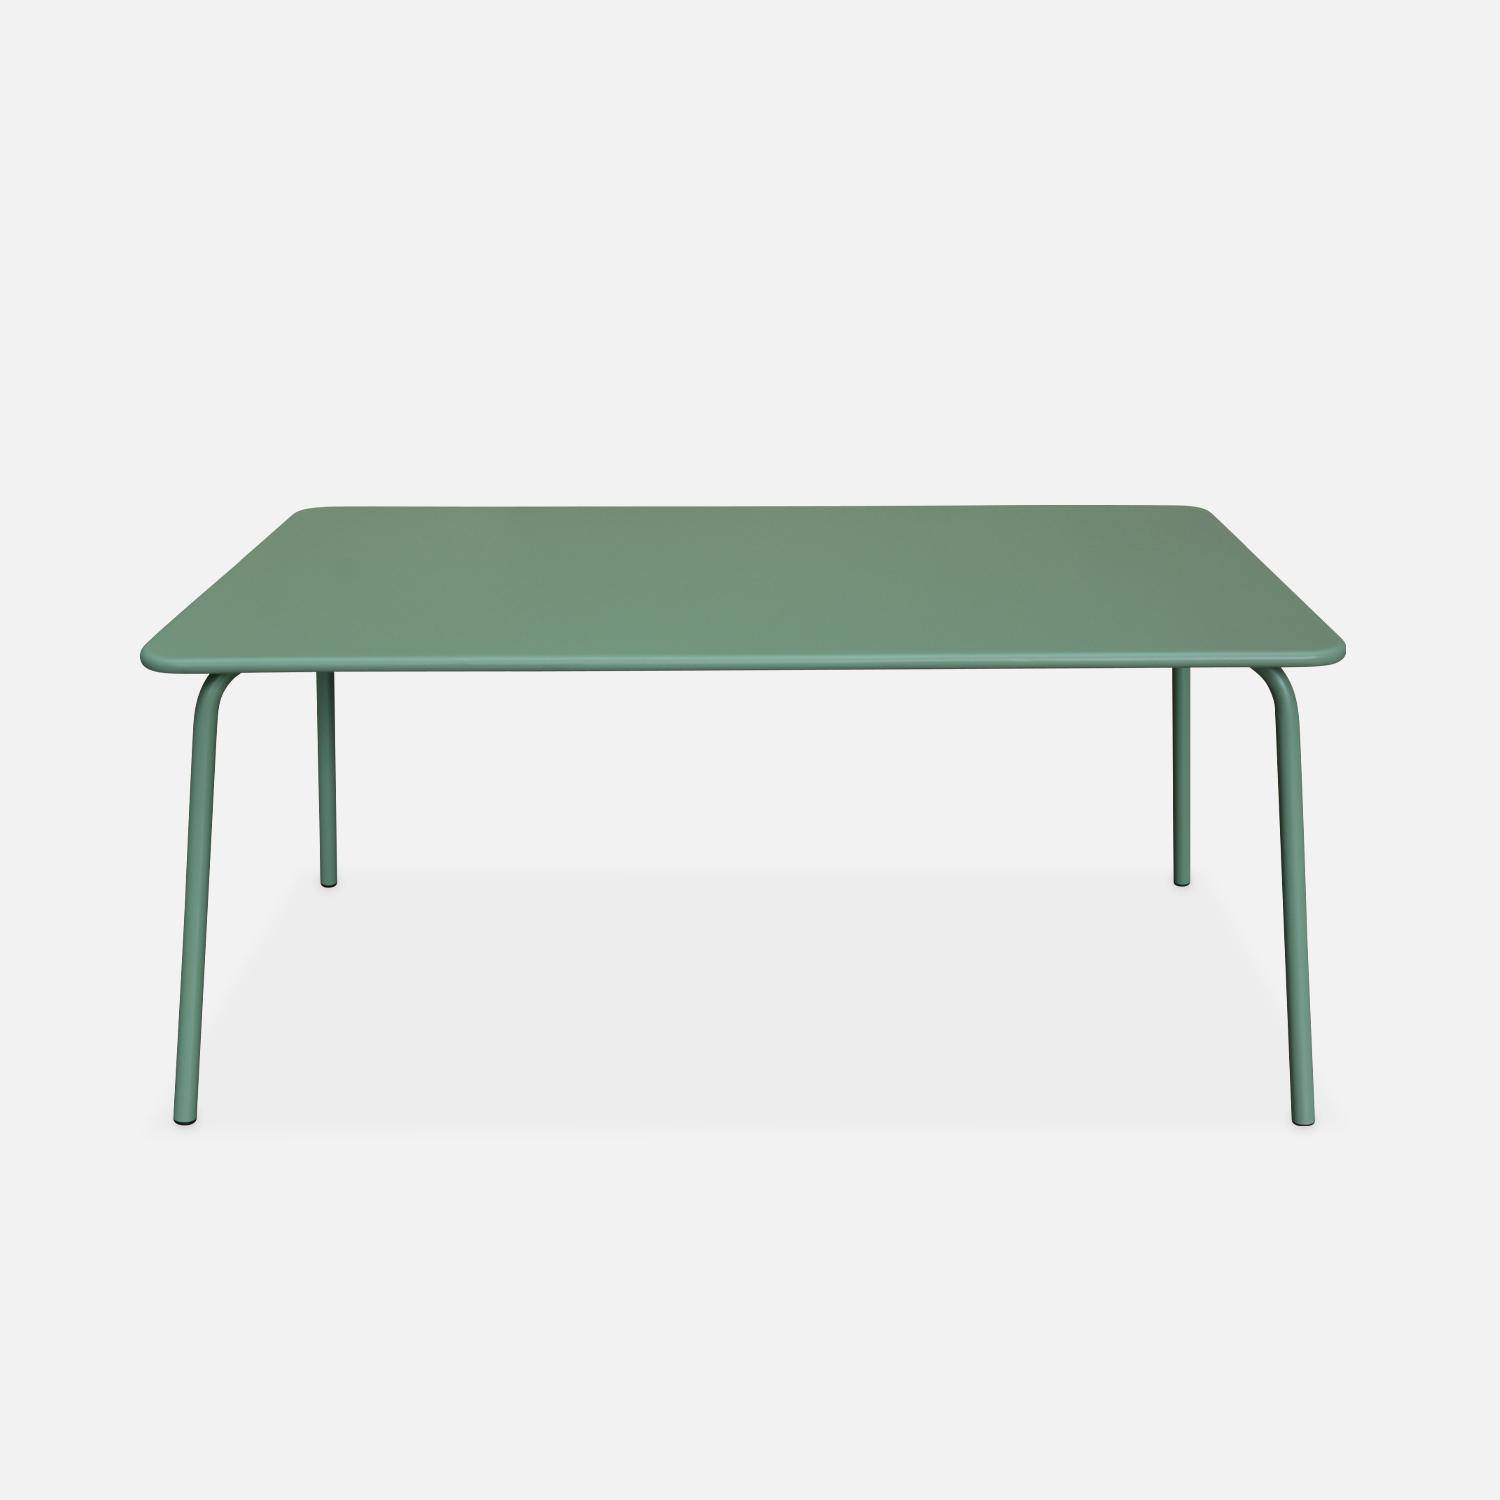 Table de jardin en métal 160x90cm + 4 chaises empilables et 2 fauteuils vert jade,sweeek,Photo2